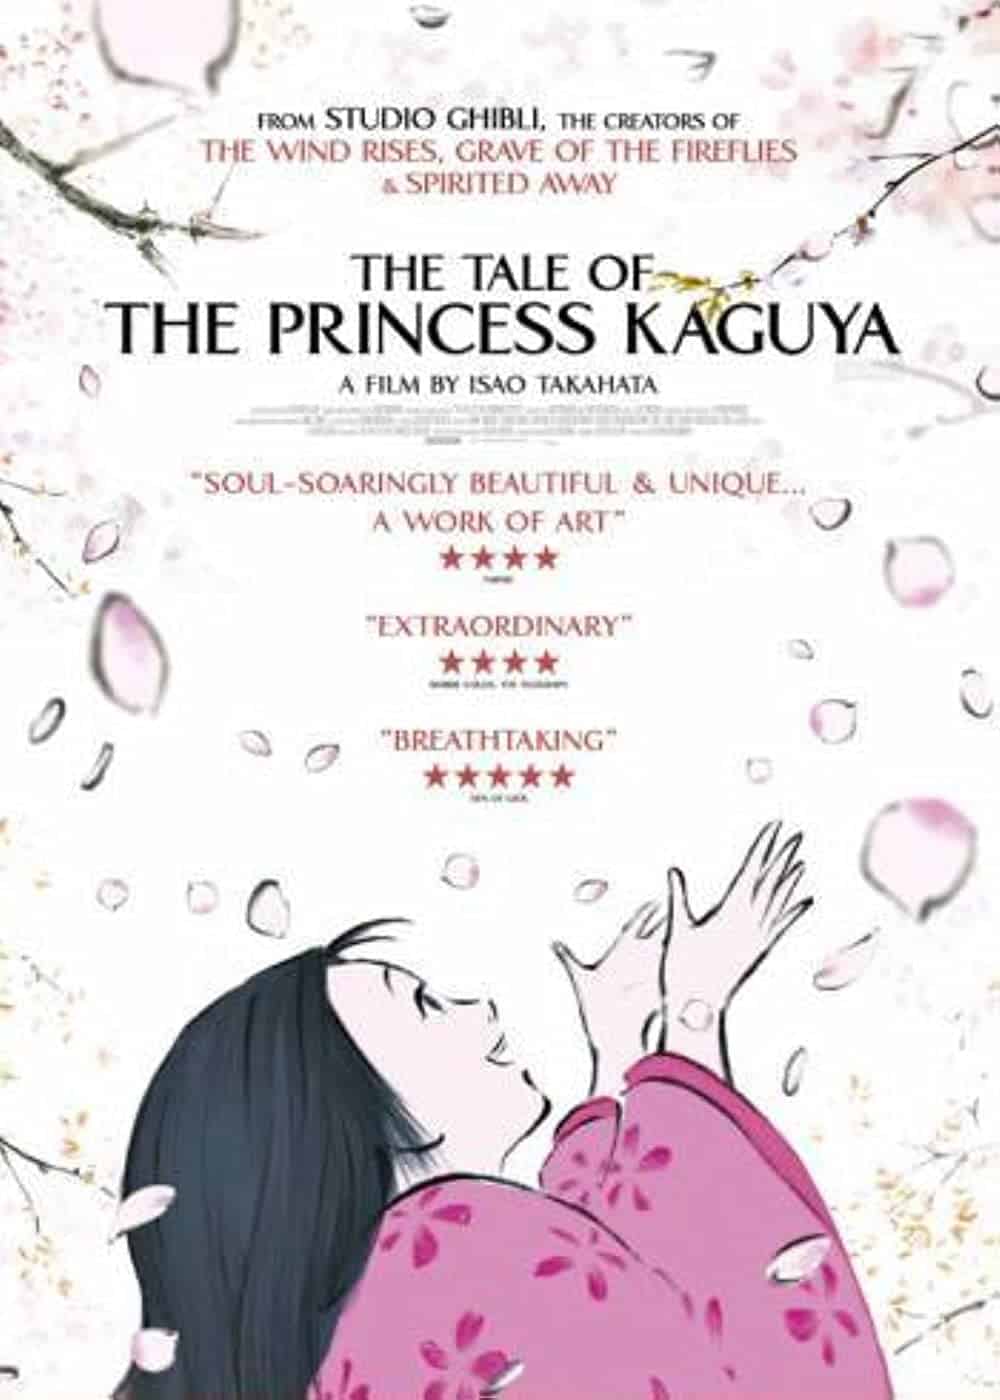 The Tale of The Princess Kaguya (2013) Best Princess Movies